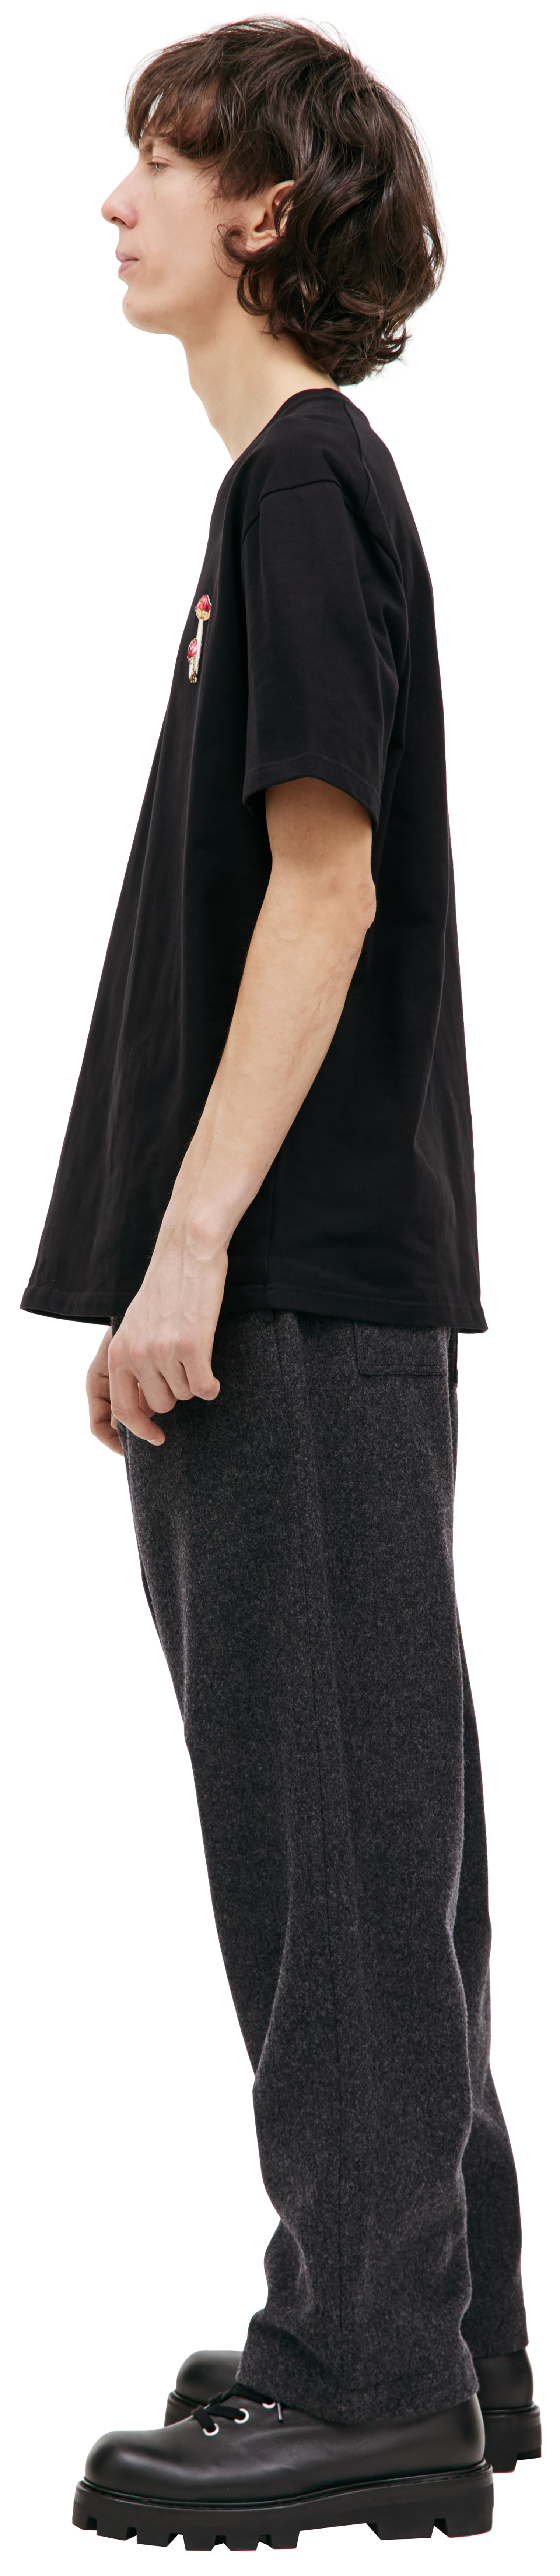 Jil Sander Черная футболка с вышивкой